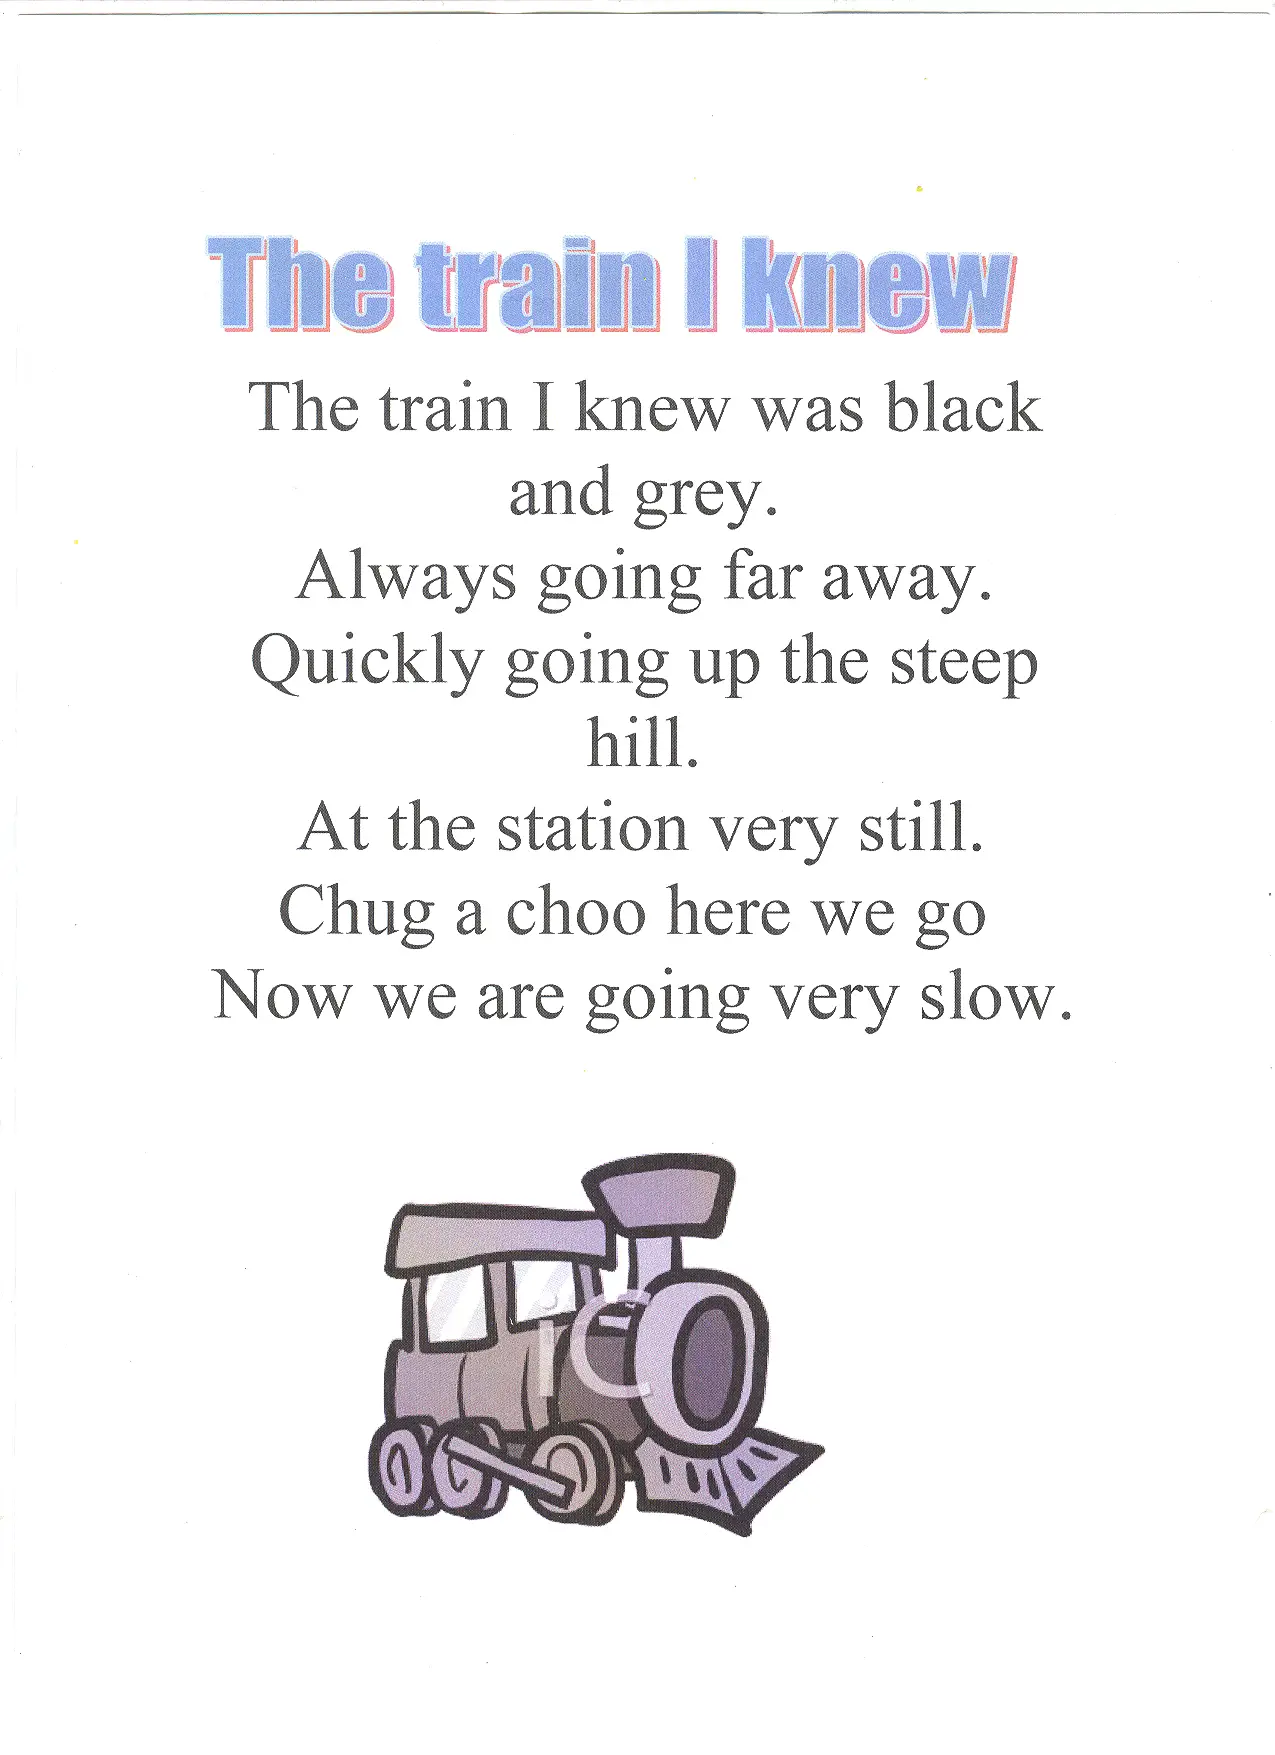 train journey poem line by line explanation